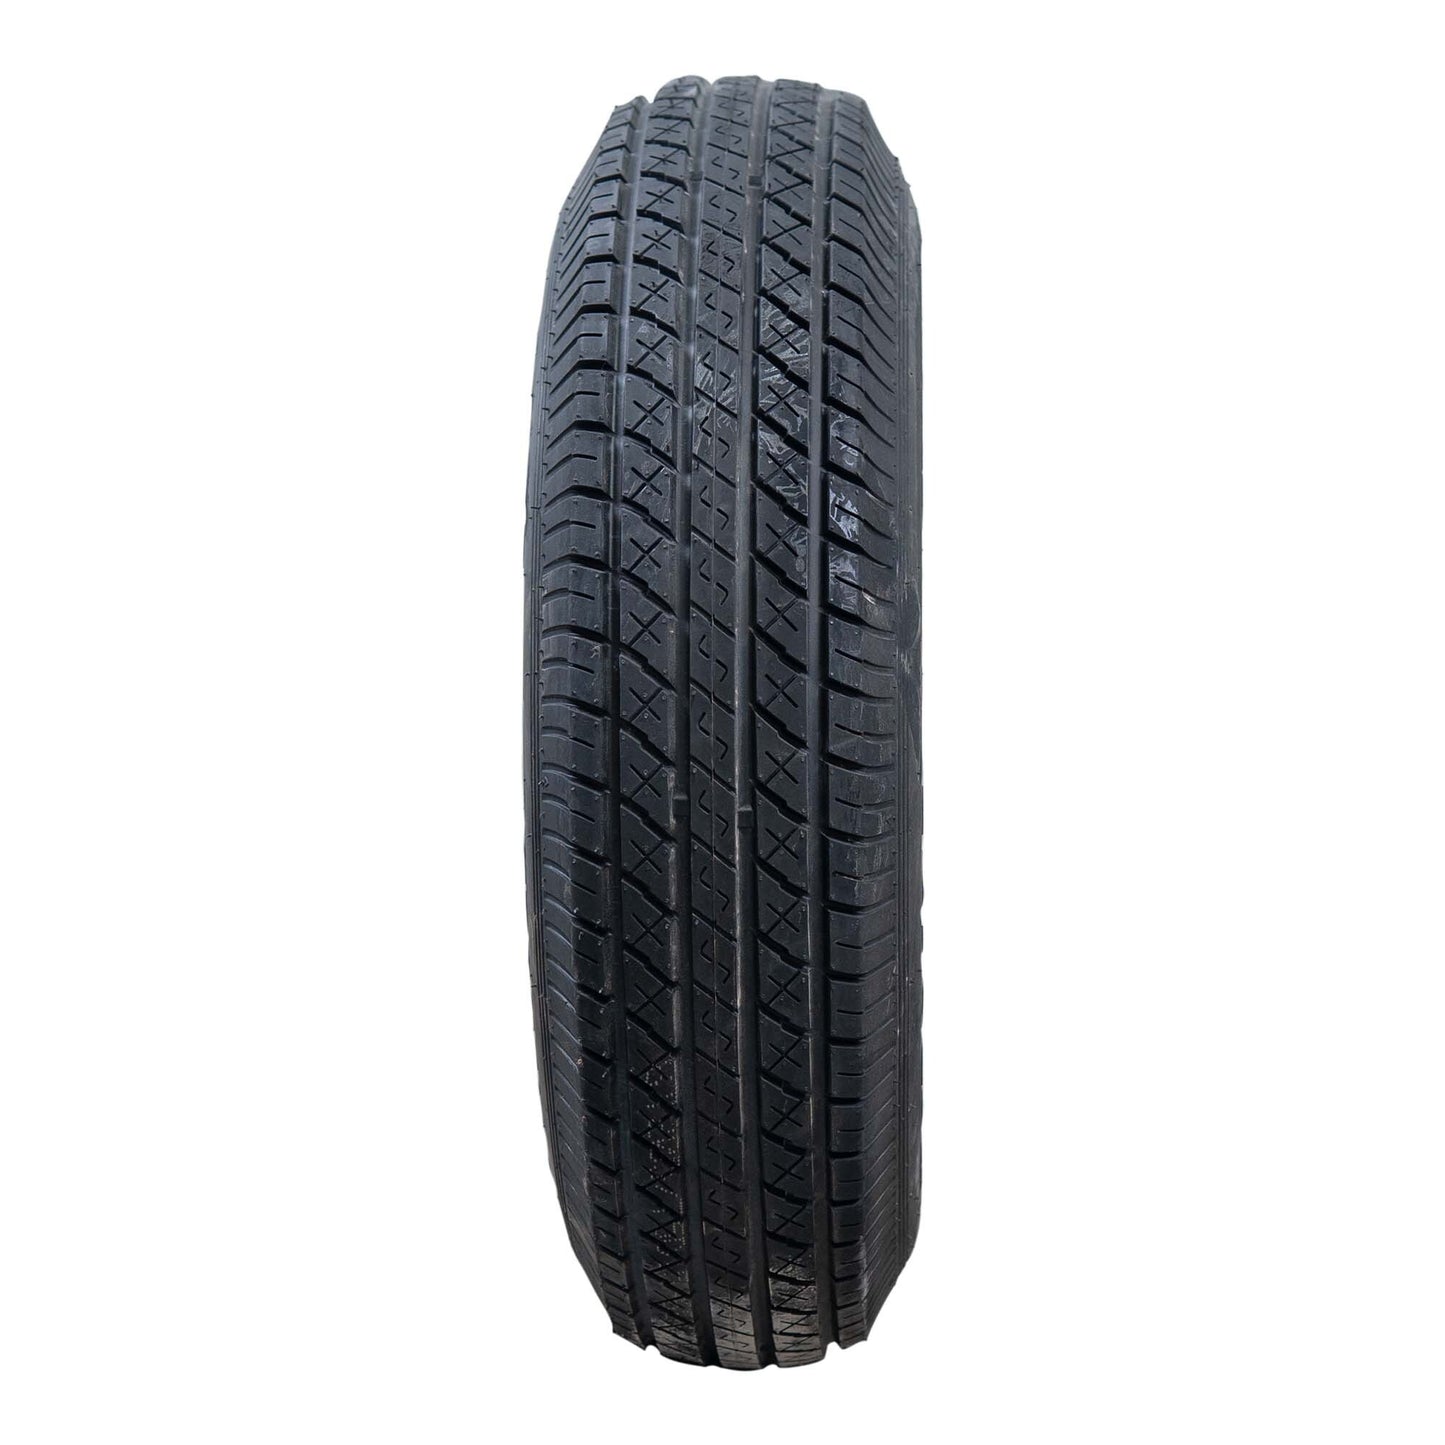 Goodride 15" 6 ply Bias Trailer Tire & Wheel - ST 205/75D15 5x4.5 Lug (Silver Mod)